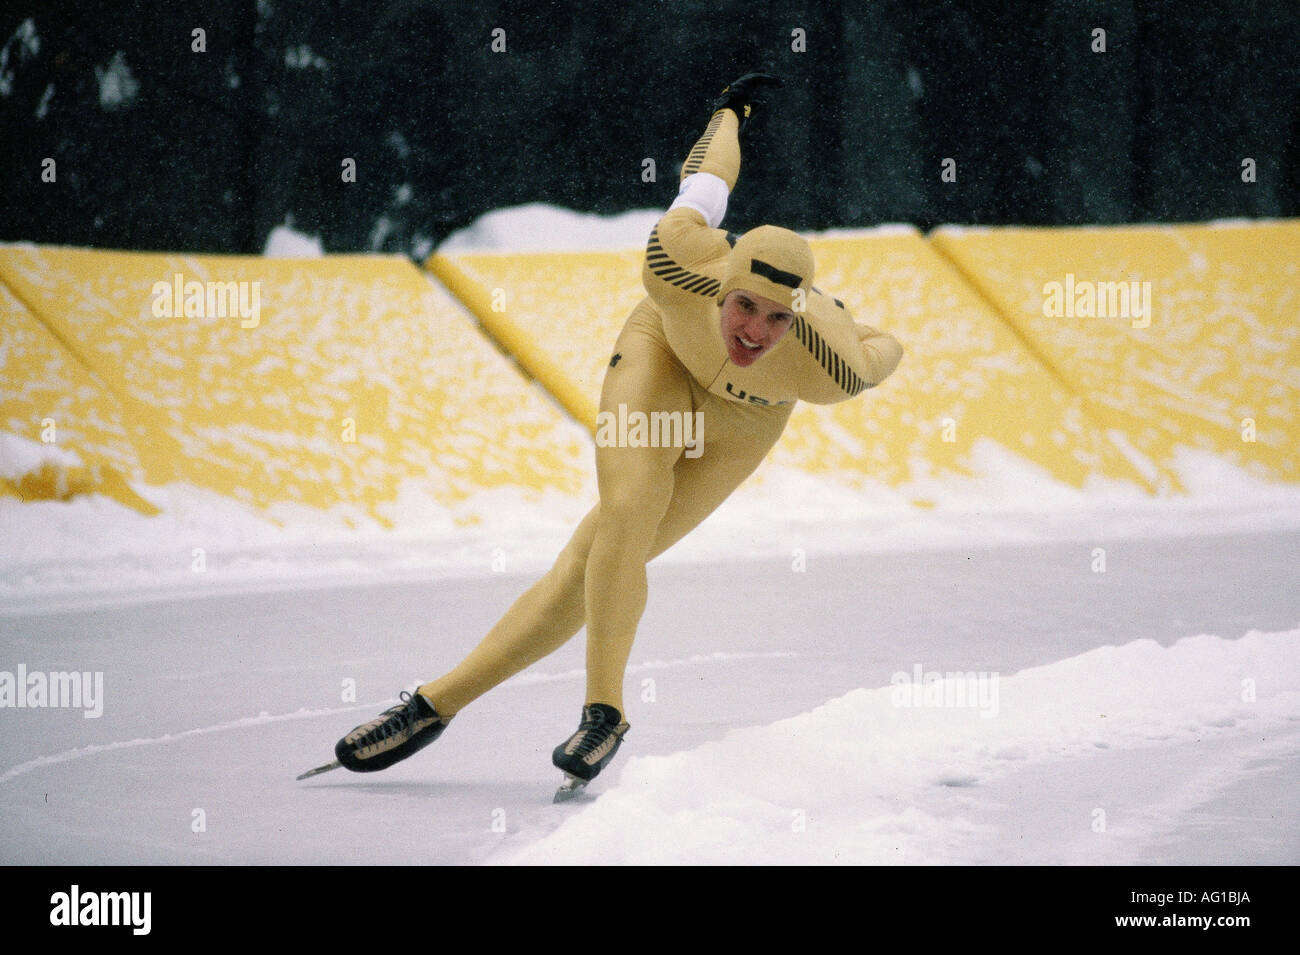 Heiden, Eric, * 15.6.1958, American athlete, Speed Skating, full length, Winter Olympic, Olympic Games, Lake Placid, 1980, Stock Photo